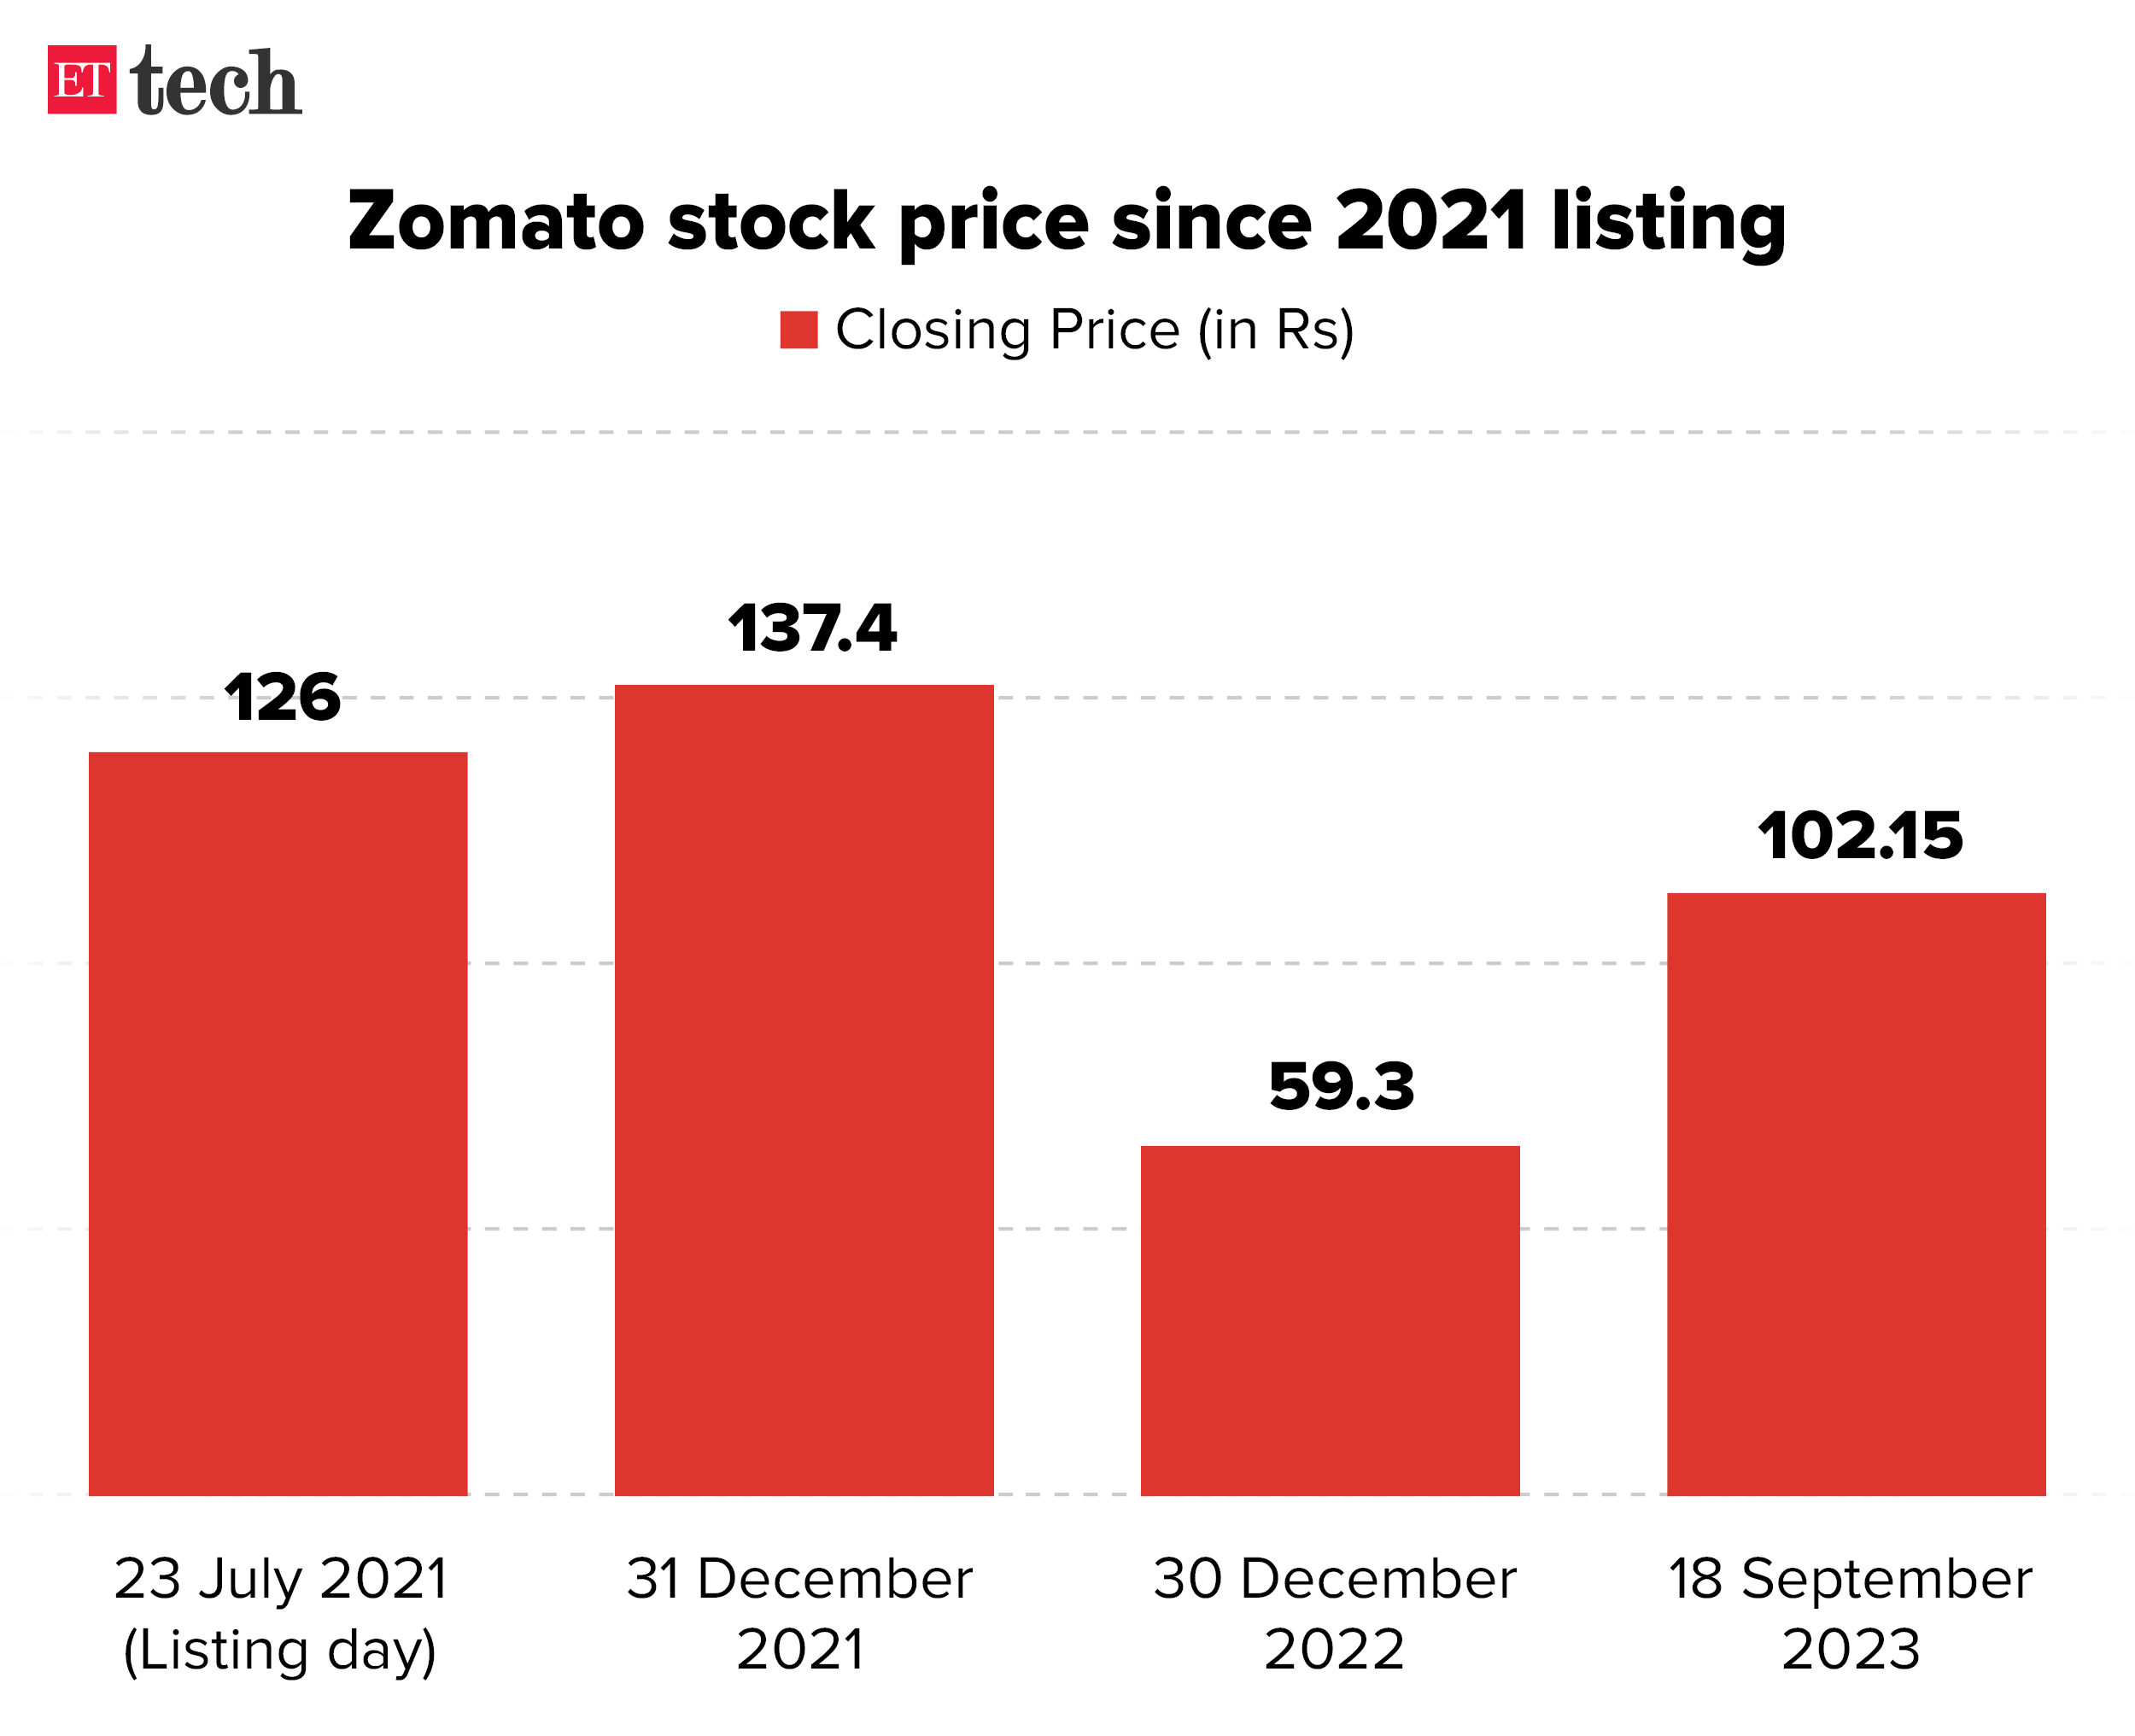 Zomato stock price since 2021 listing